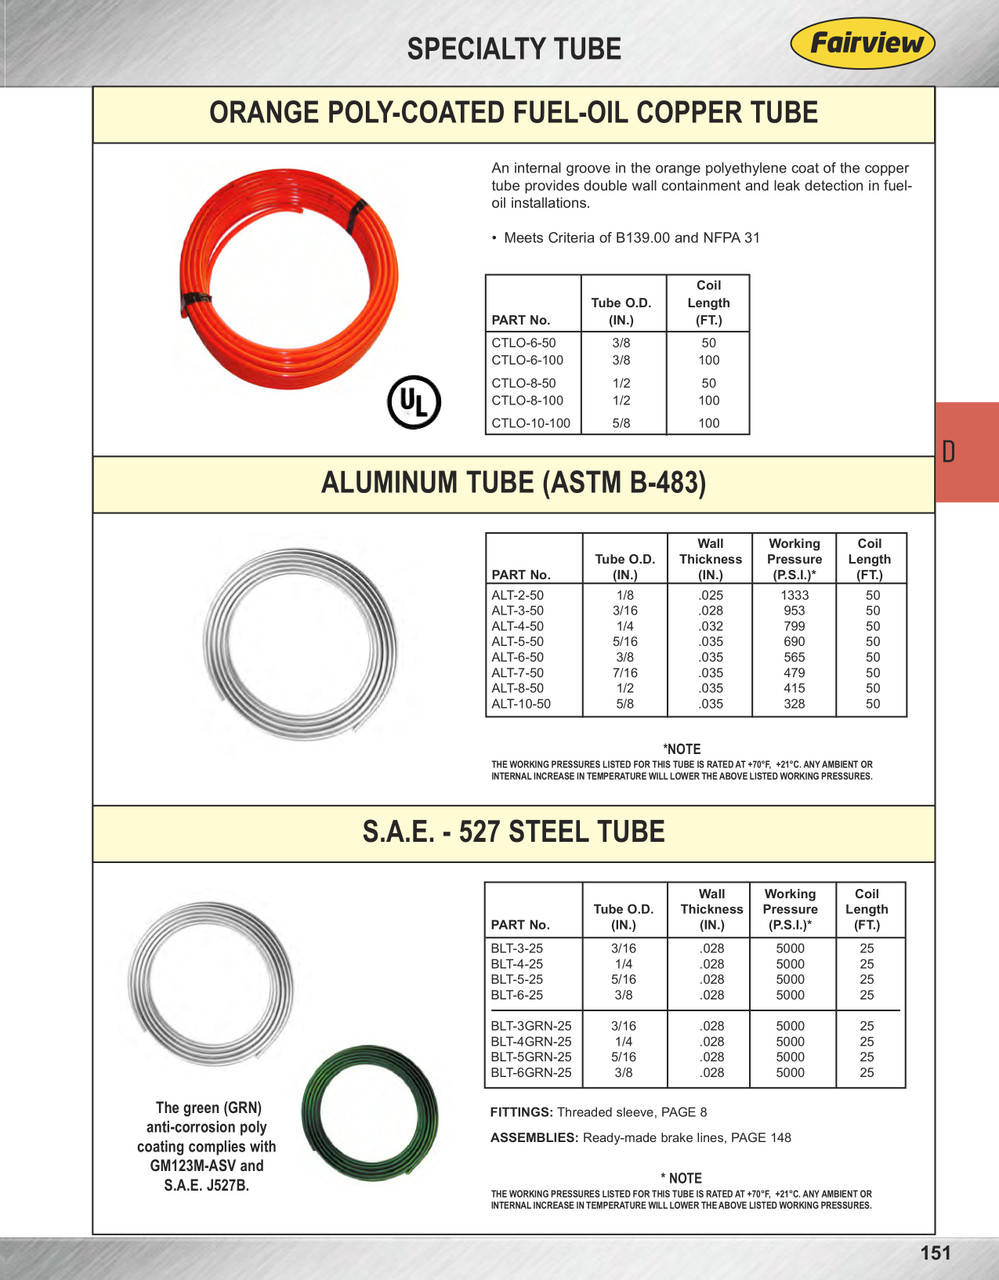 1/4" x 50' 50' Coil Annealed ASTM B-483 Aluminum Tubing  ALT-4-50